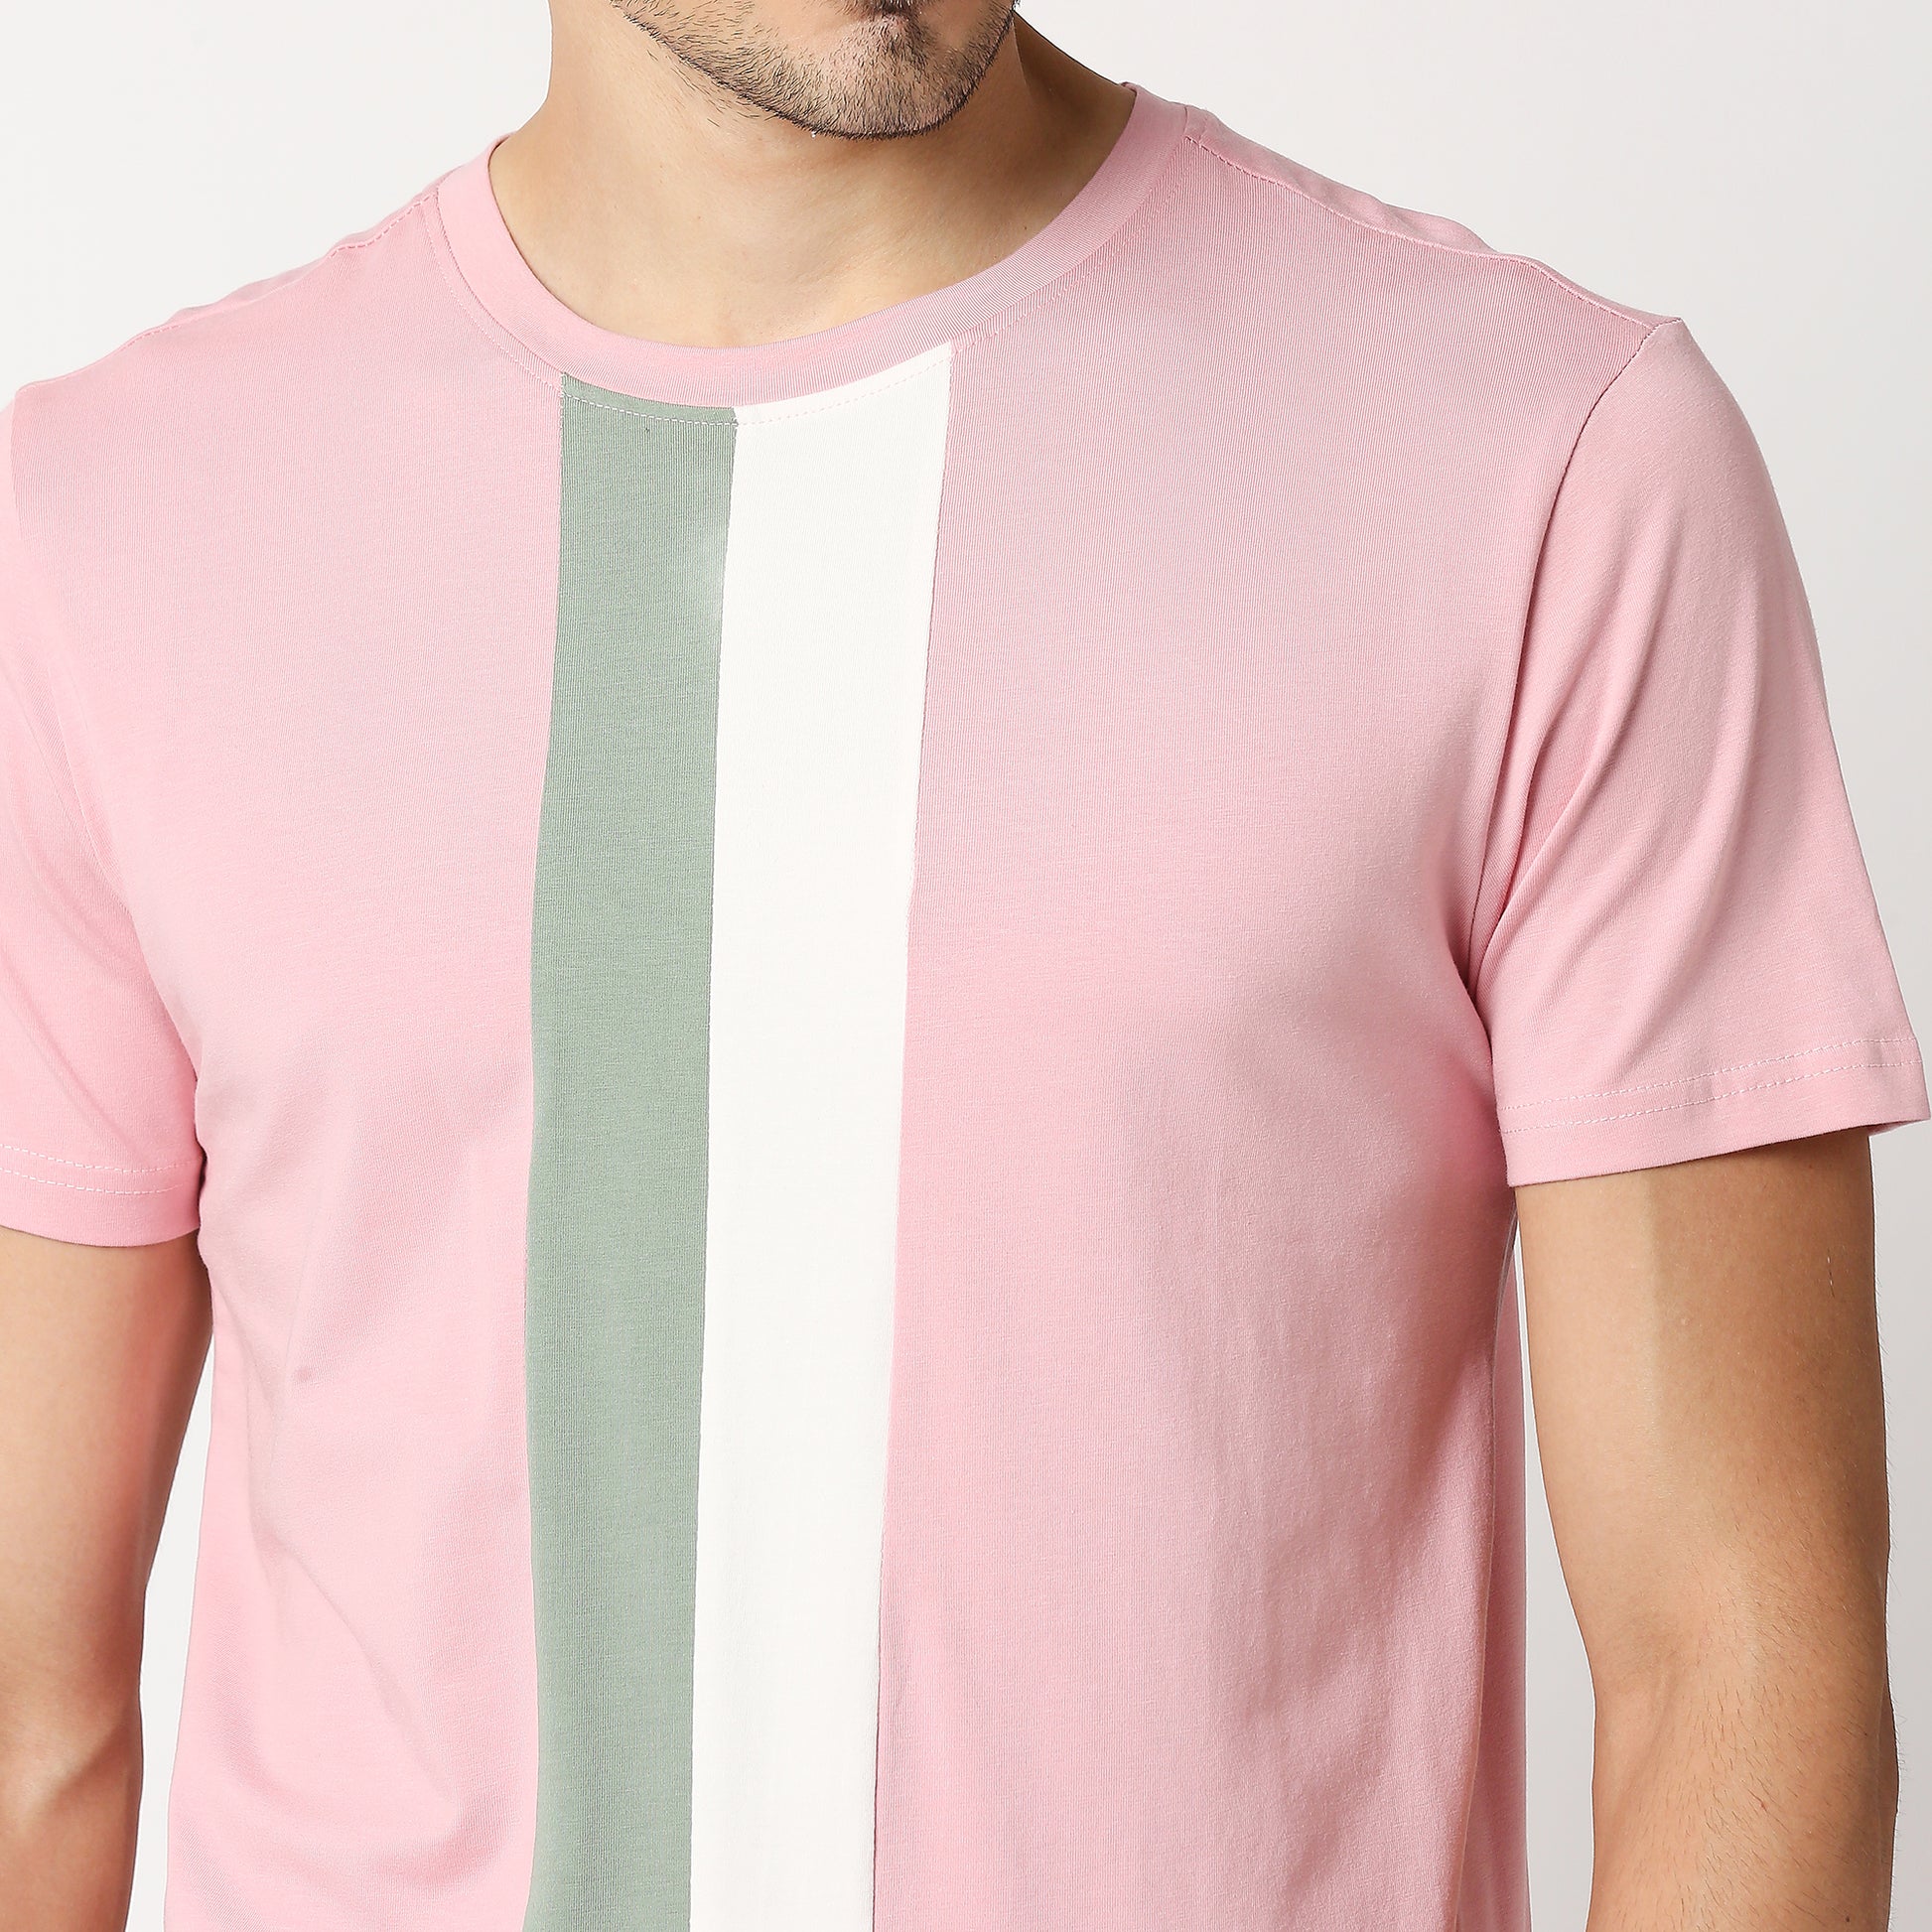 Fostino Auckland Pink Round Neck T-Shirt - Fostino - T-Shirts